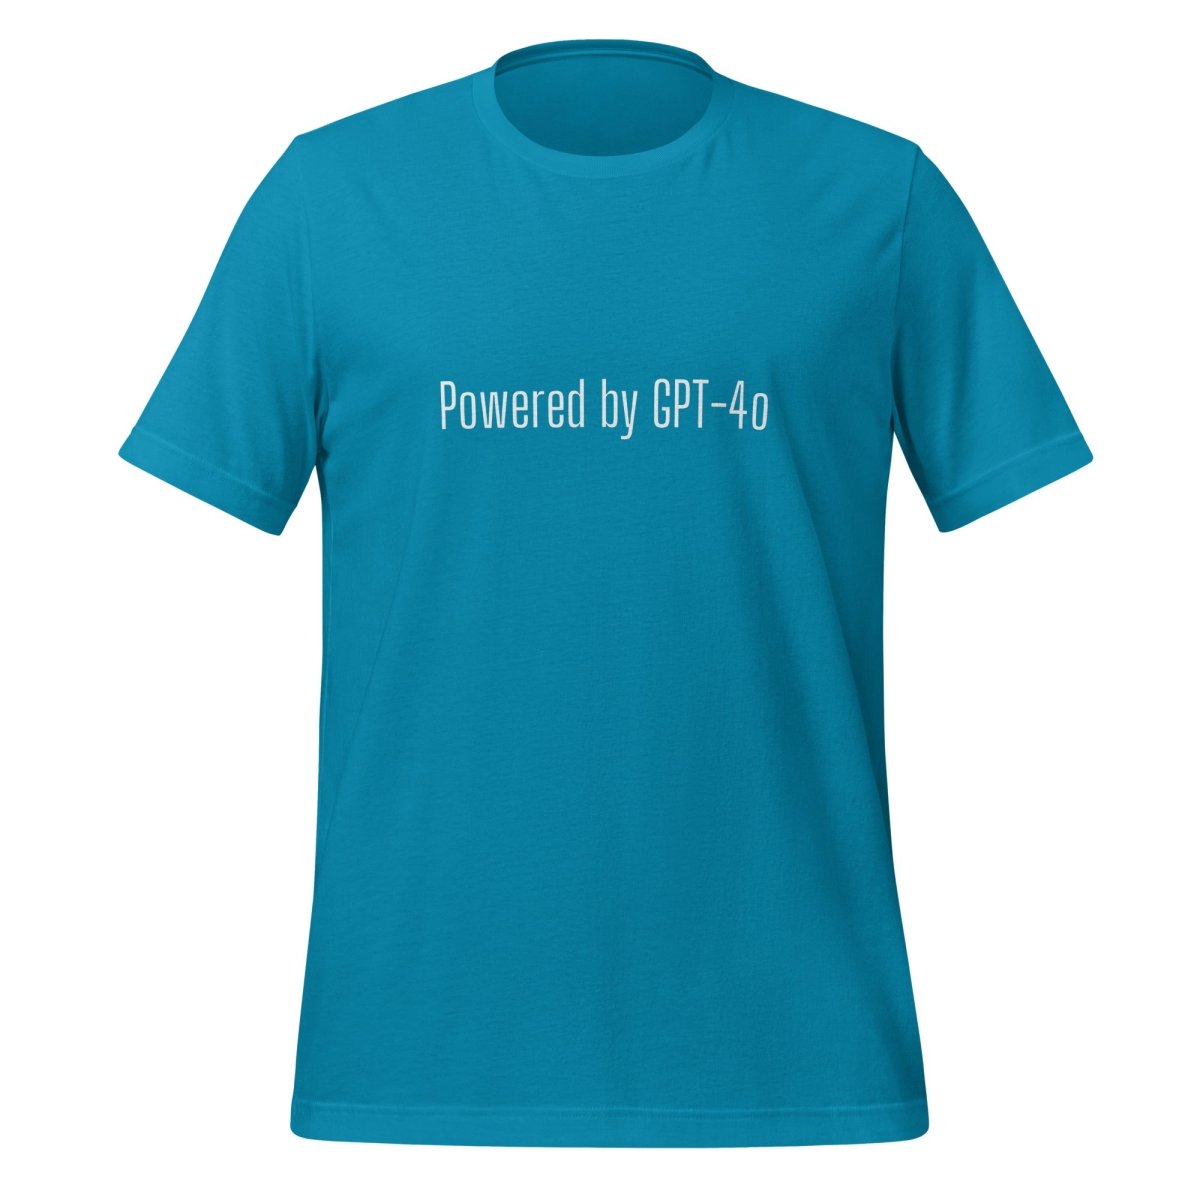 Powered by GPT - 4o T - Shirt 4 (unisex) - Aqua - AI Store